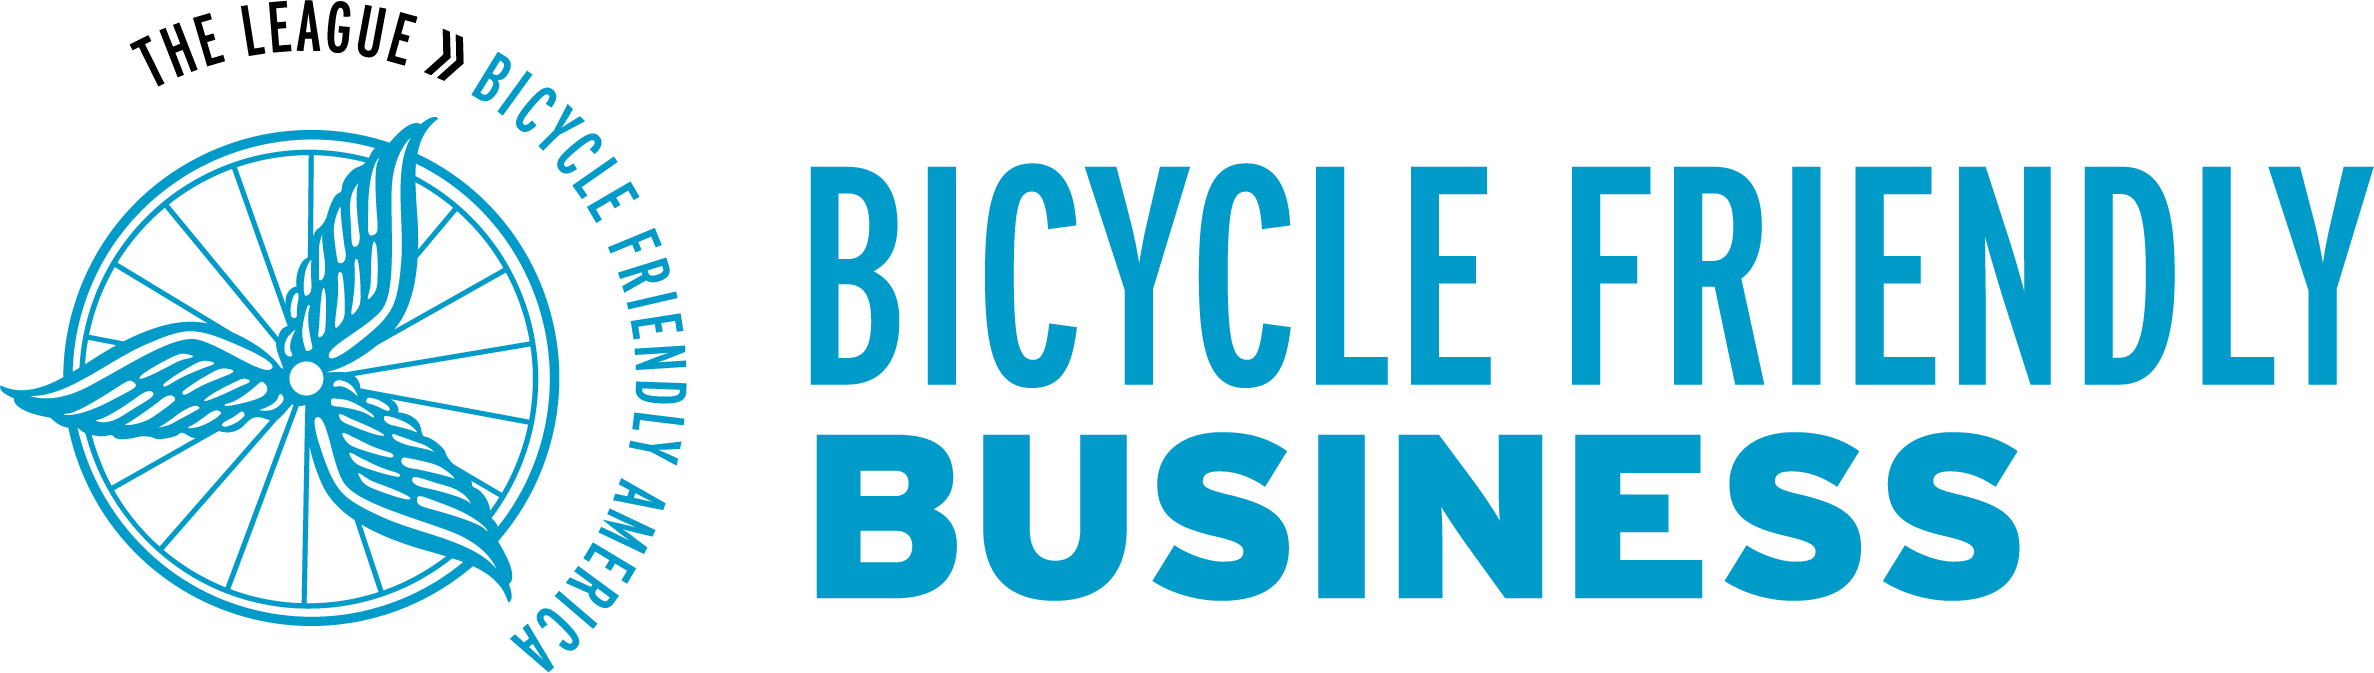 bicycle friendly business award emblem